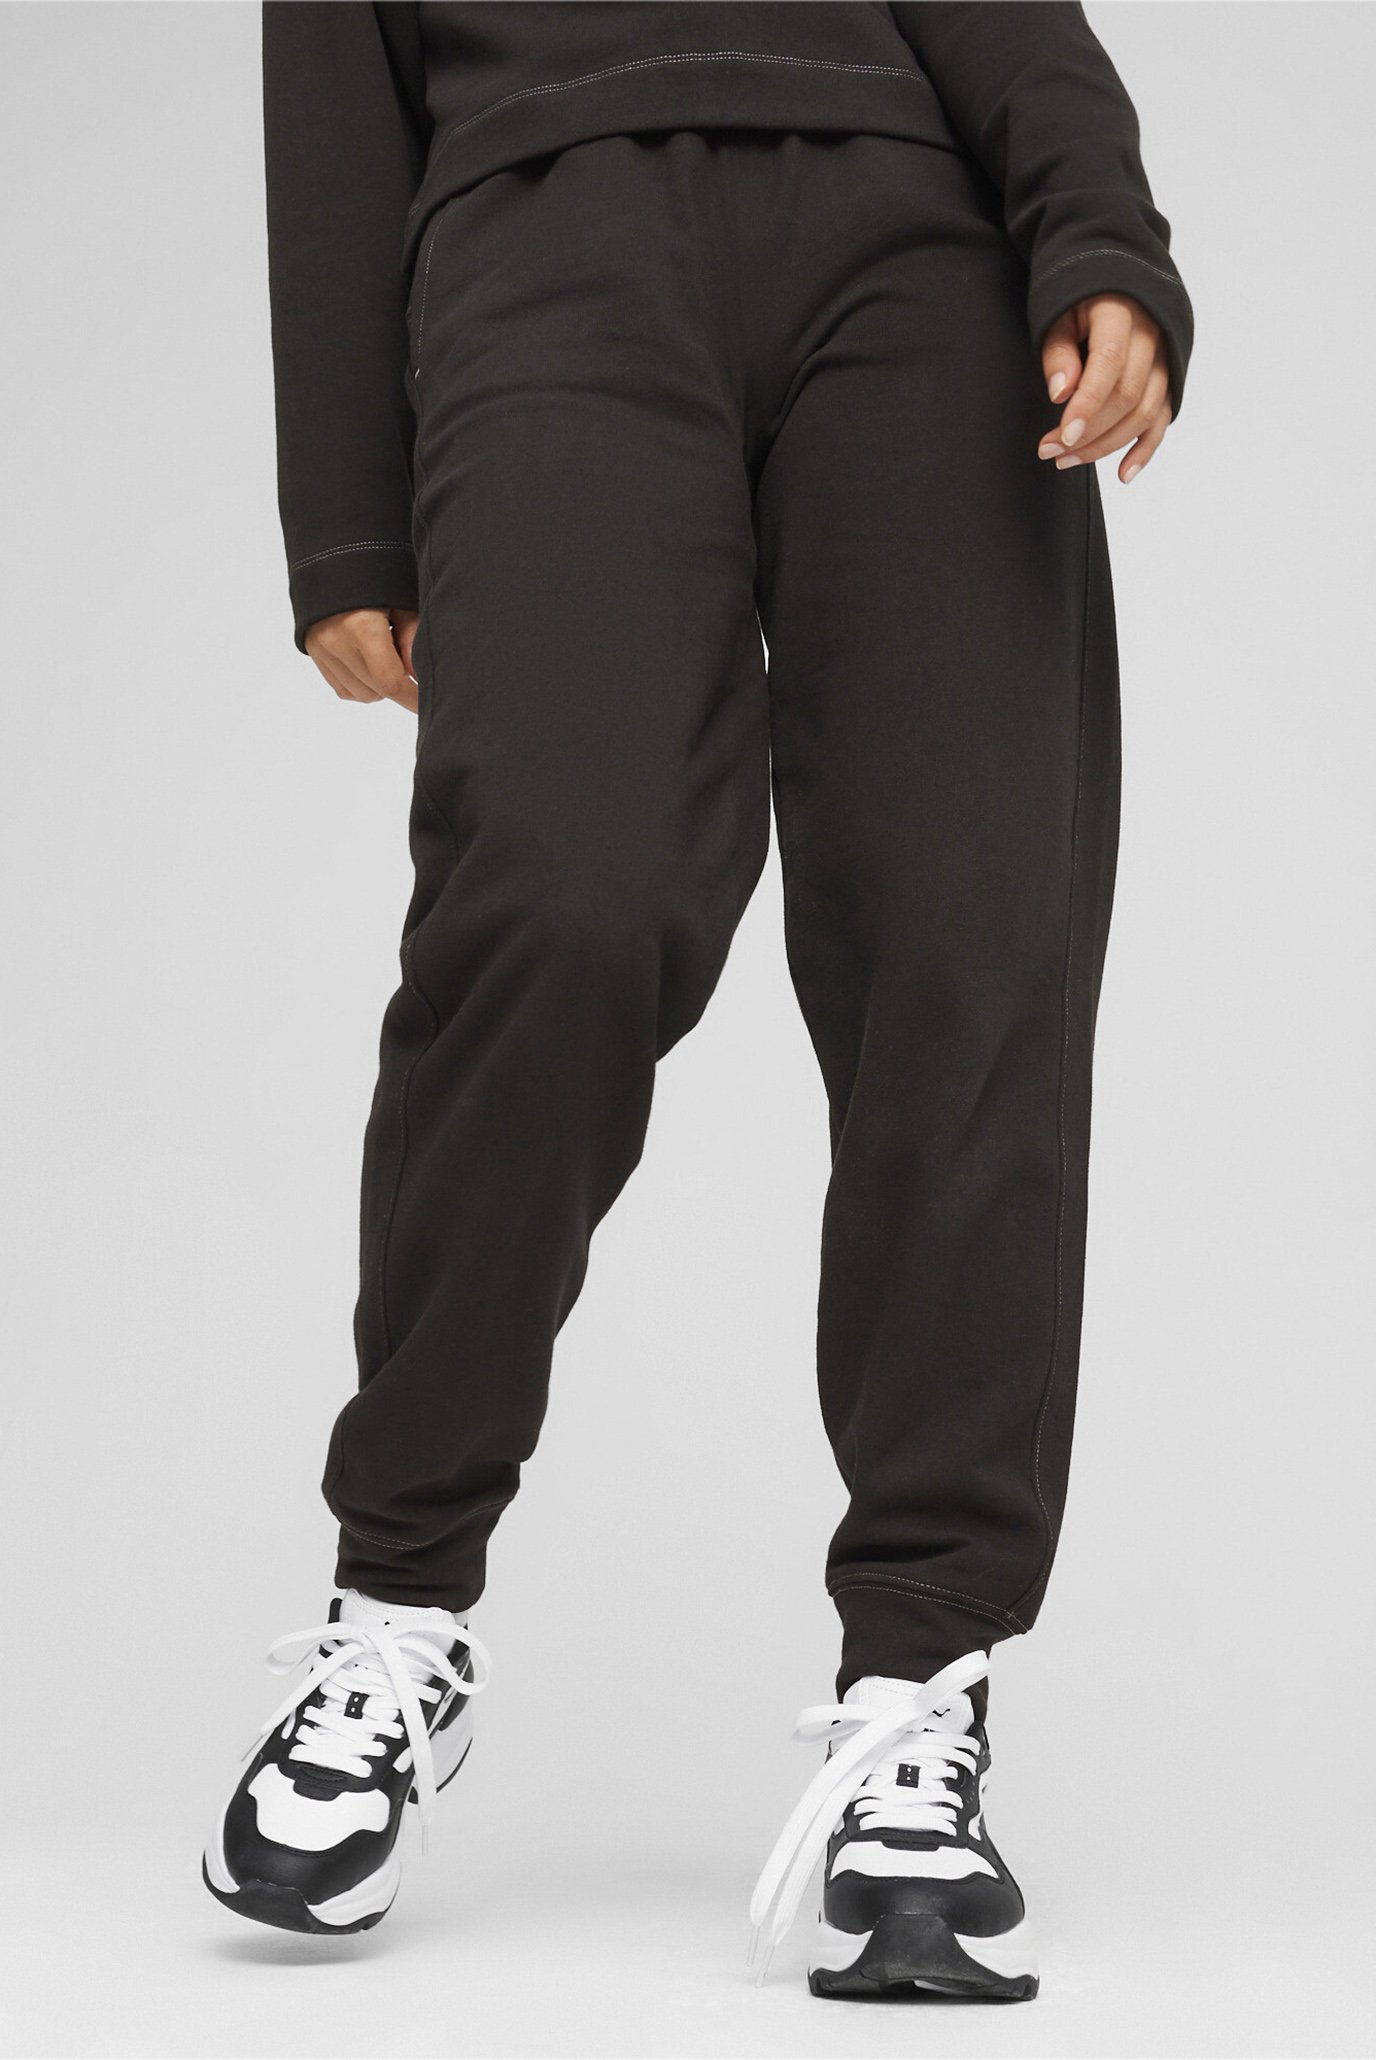 Жіночі чорні спортивні штани BETTER SPORTSWEAR Women's Sweatpants 1